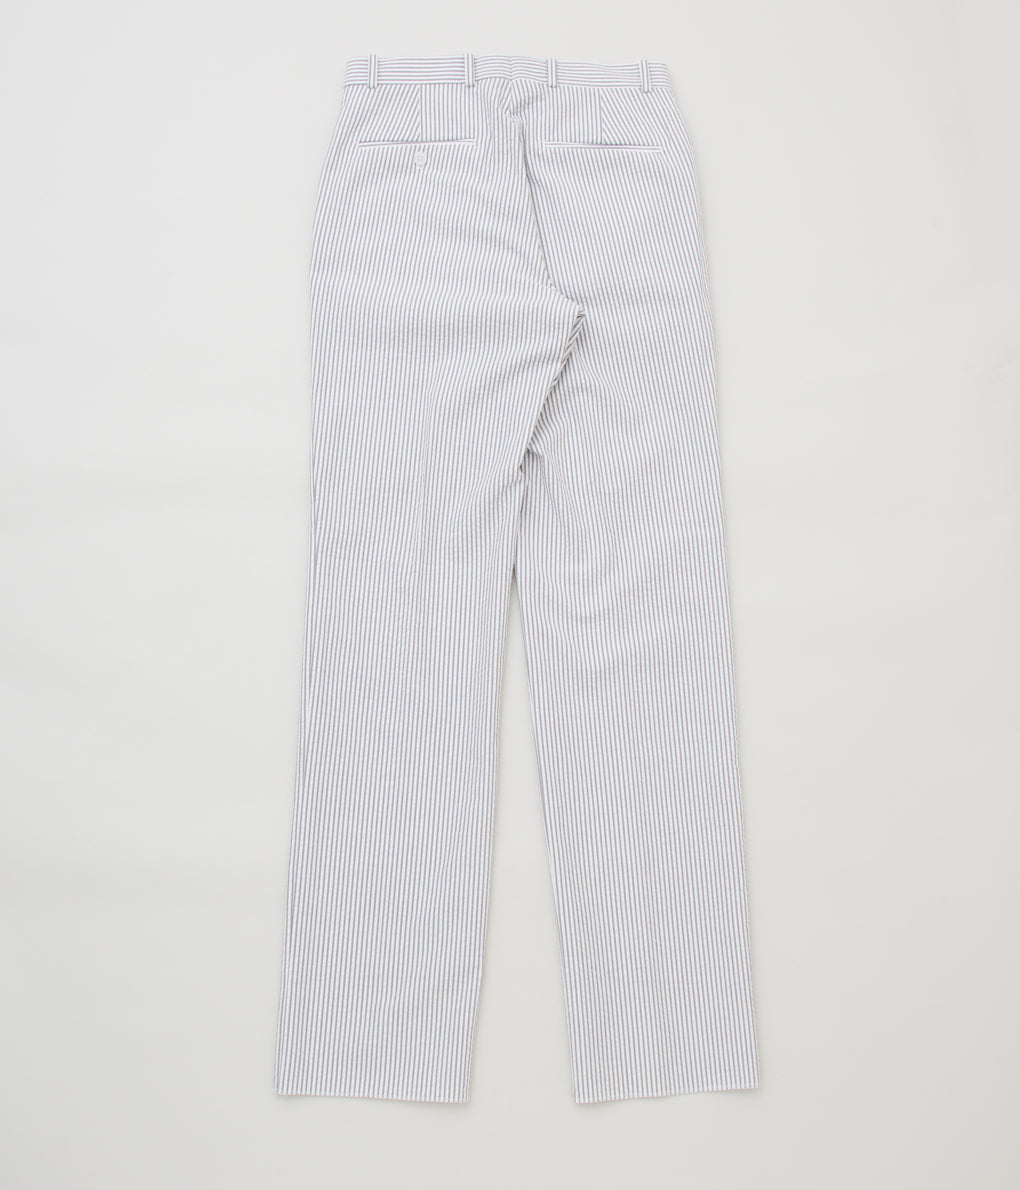 INDIVIDUALIZED CLOTHING "SEERSUCKER PANTS "(GRAY STRIPE)